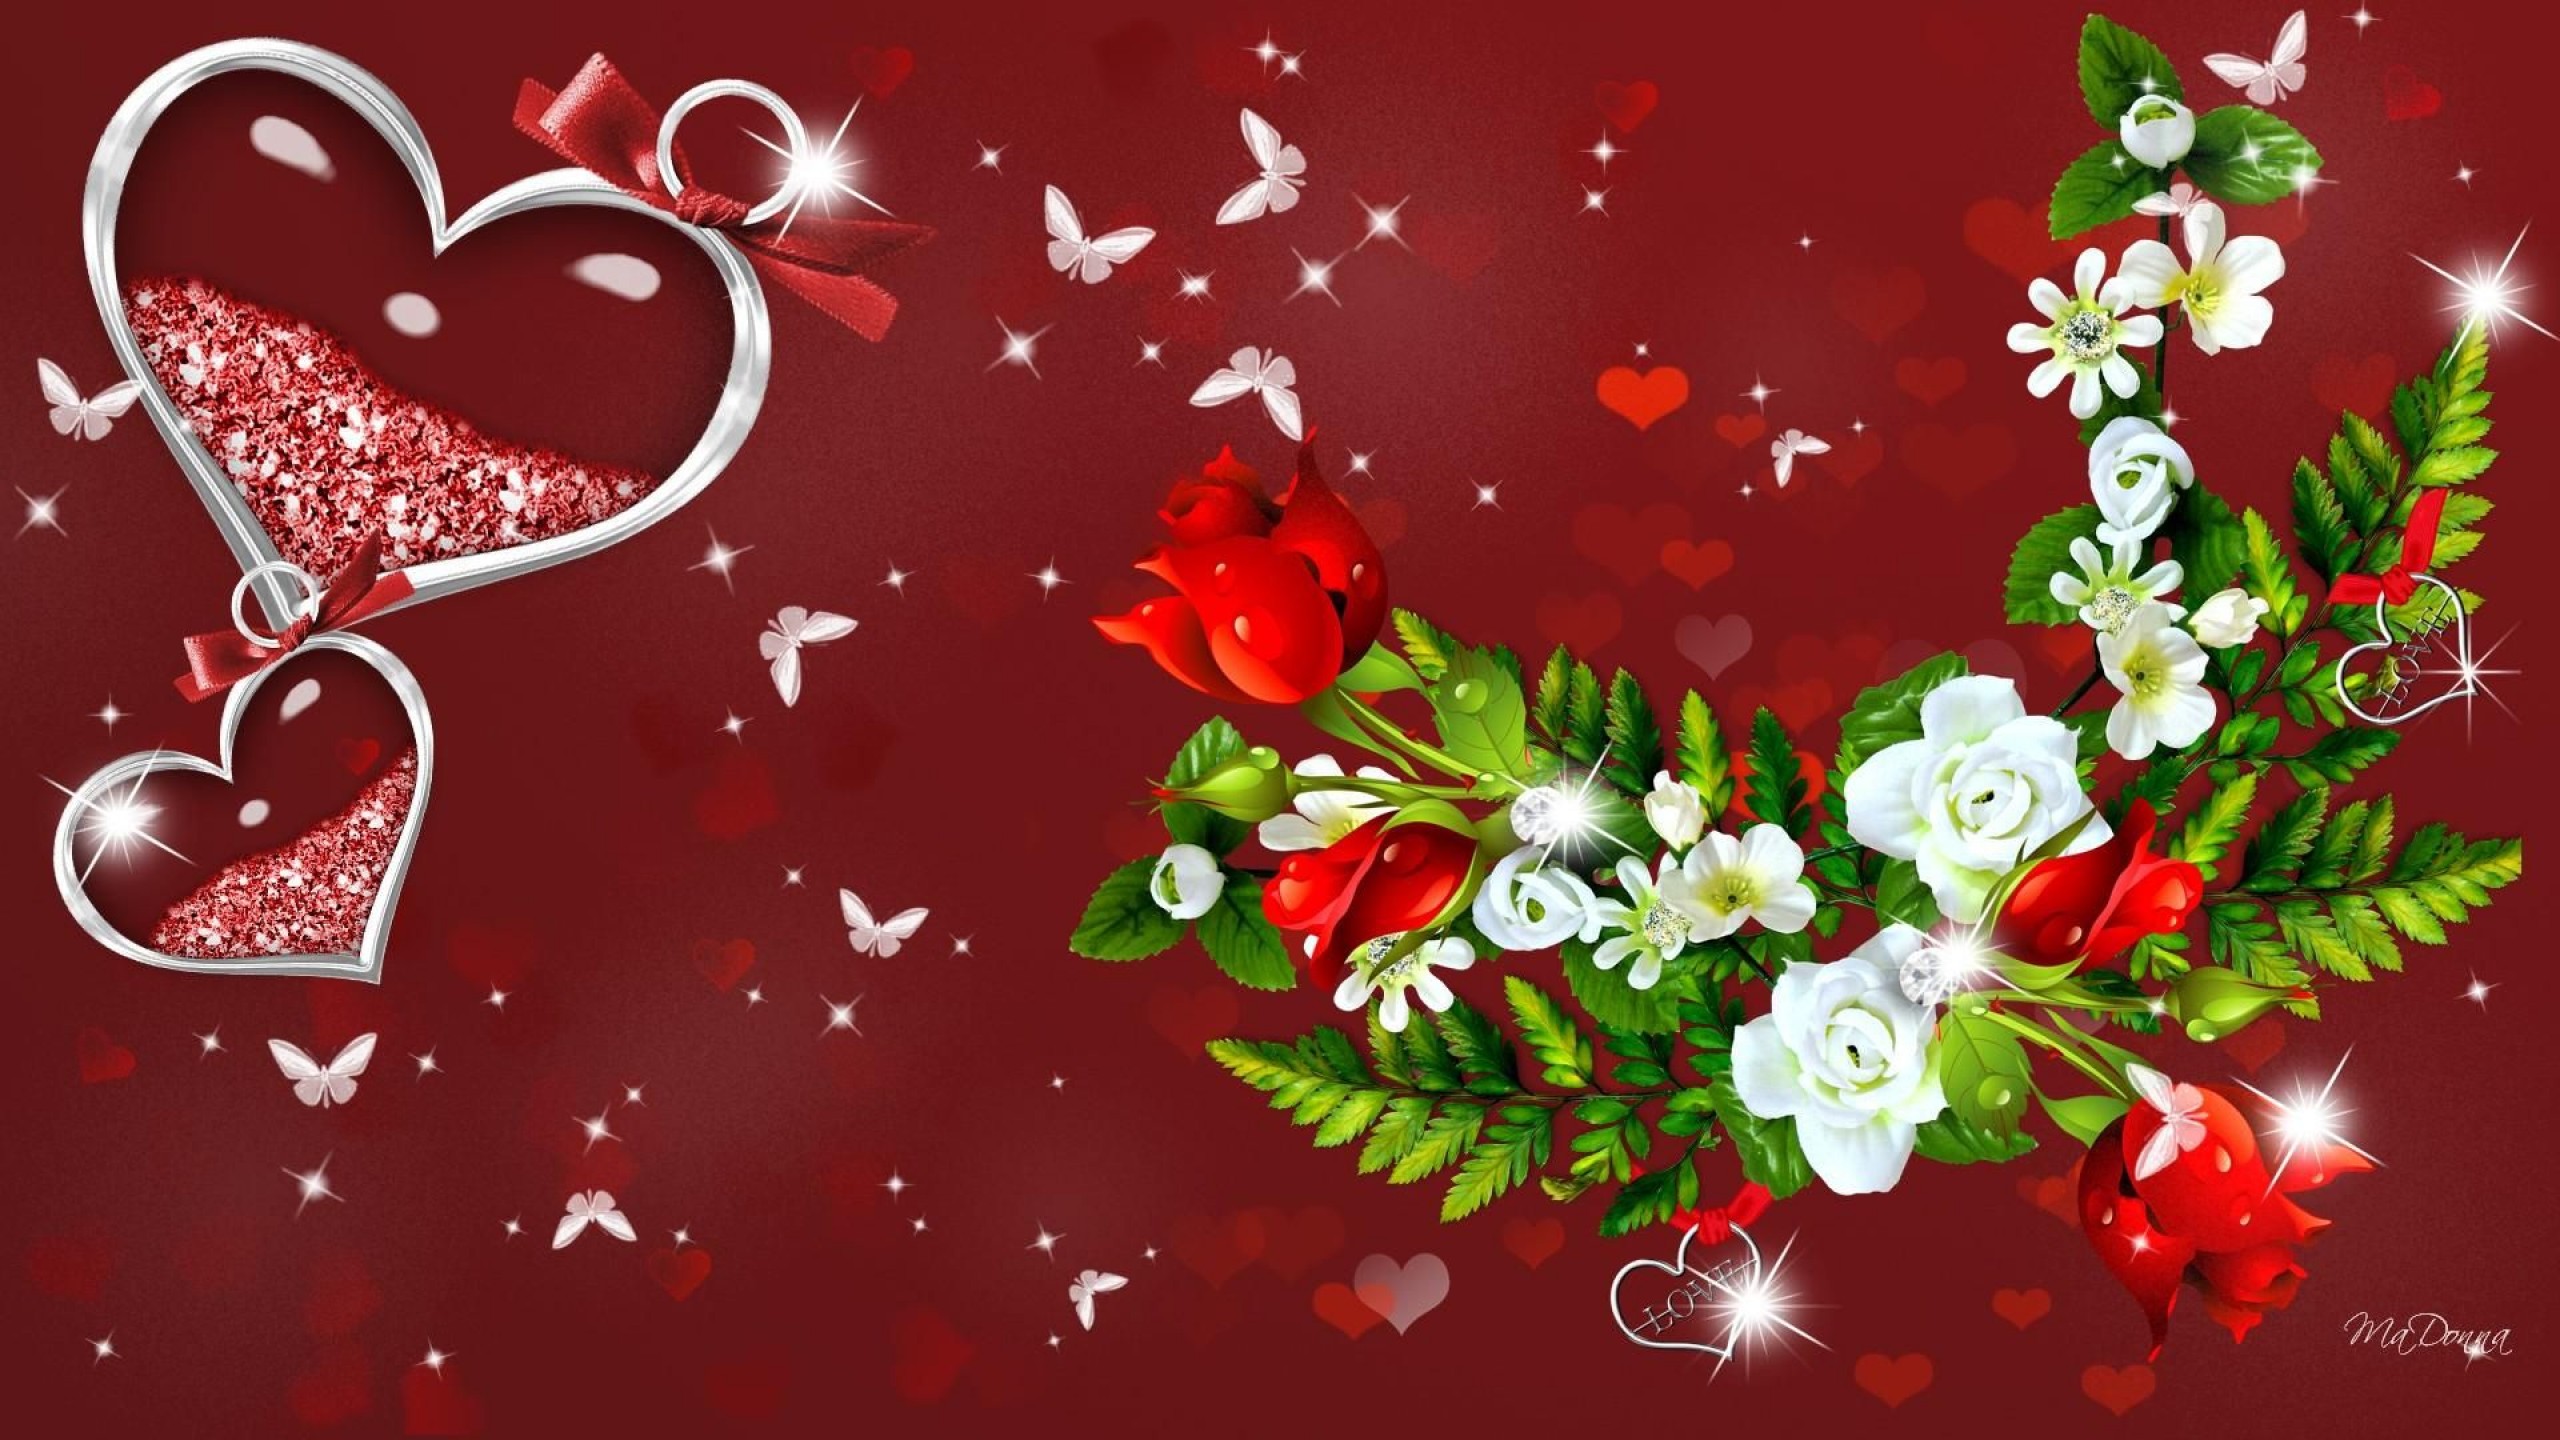 Valentine Roses Vector Wallpaper - Love Wallpaper Downloads Free -  2560x1440 Wallpaper 